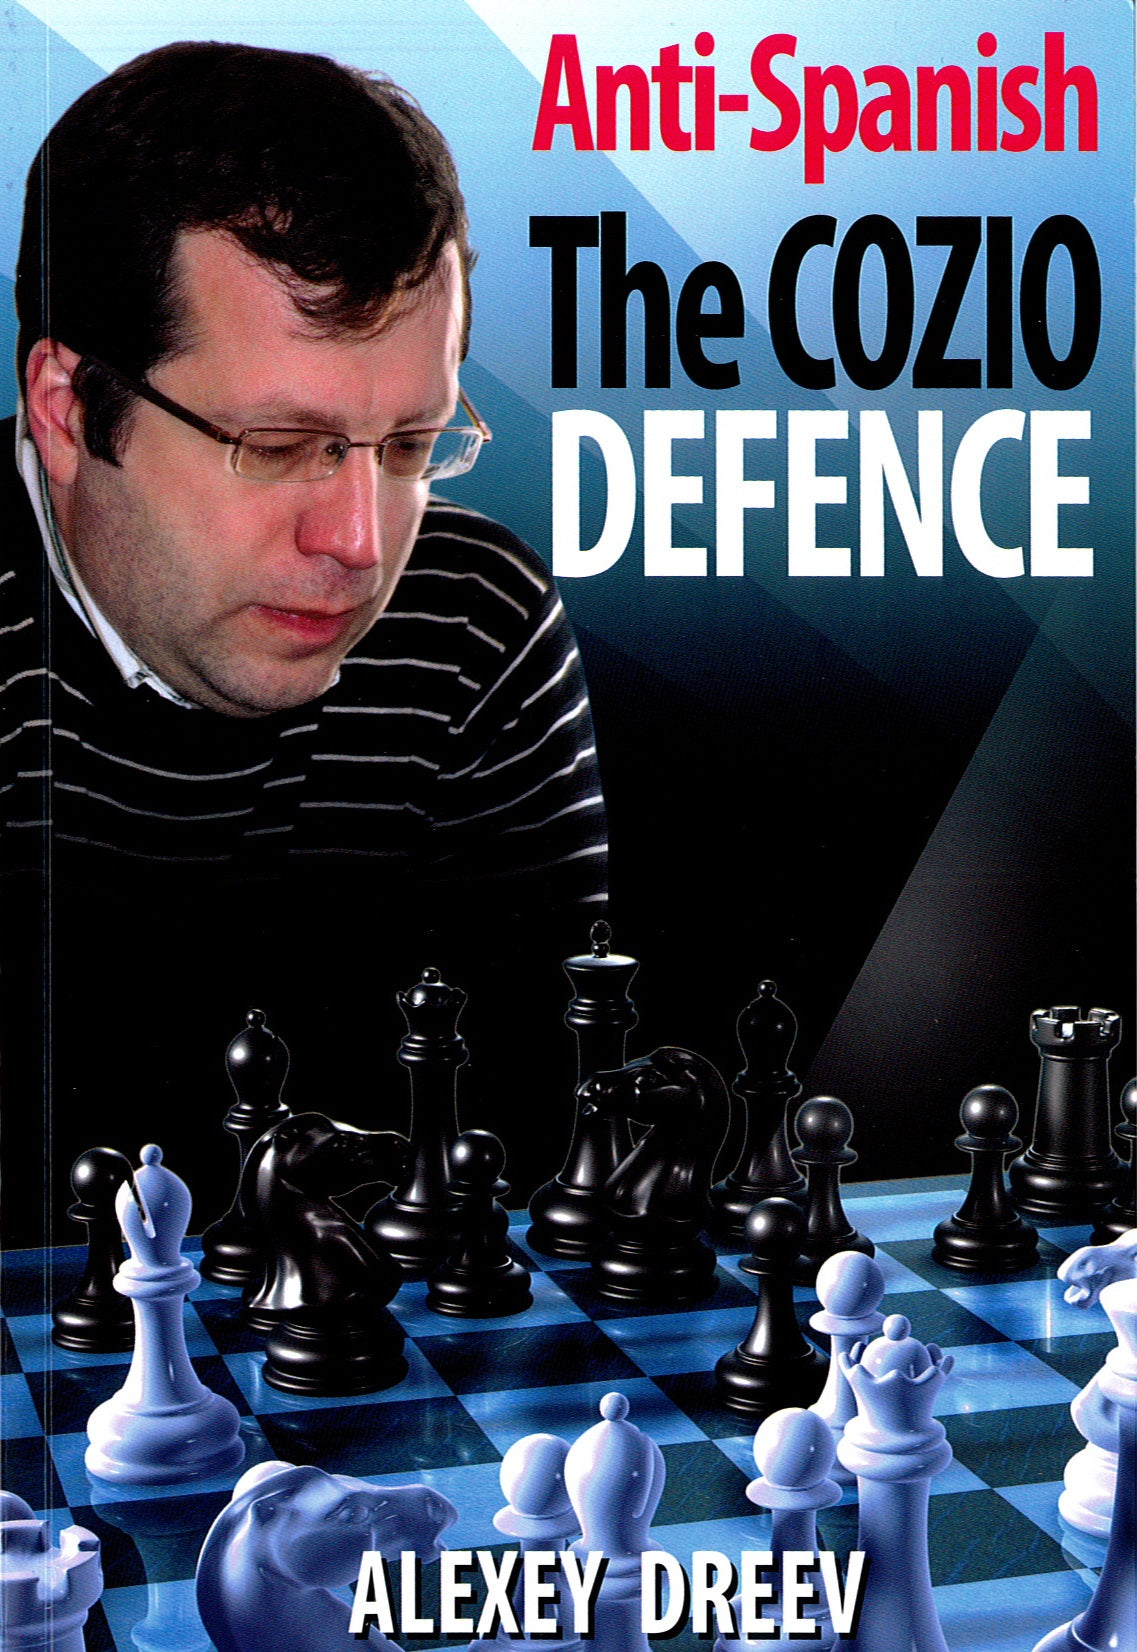 Dreev: Anti-Spanish: The Cozio Defence